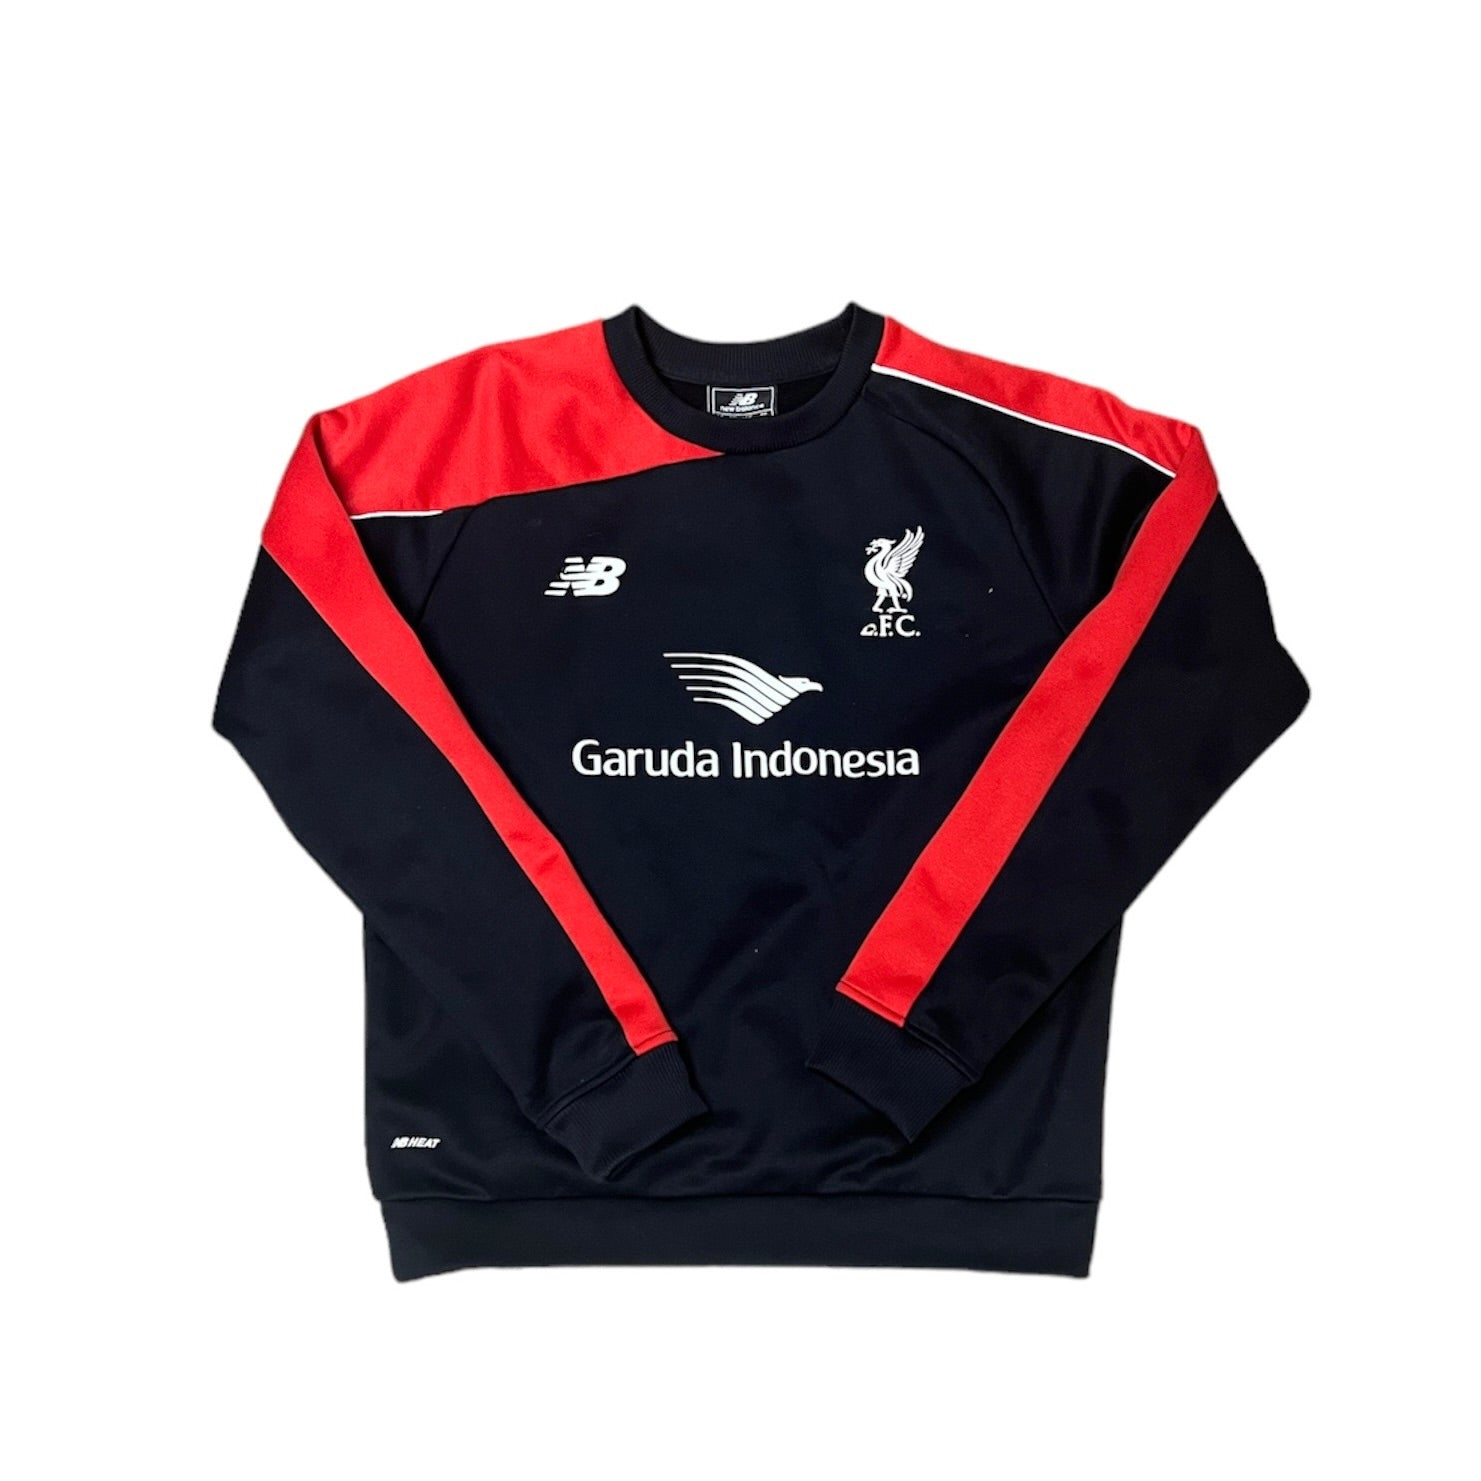 New Balance Liverpool 2015/2016 Sweatshirt (Youth)